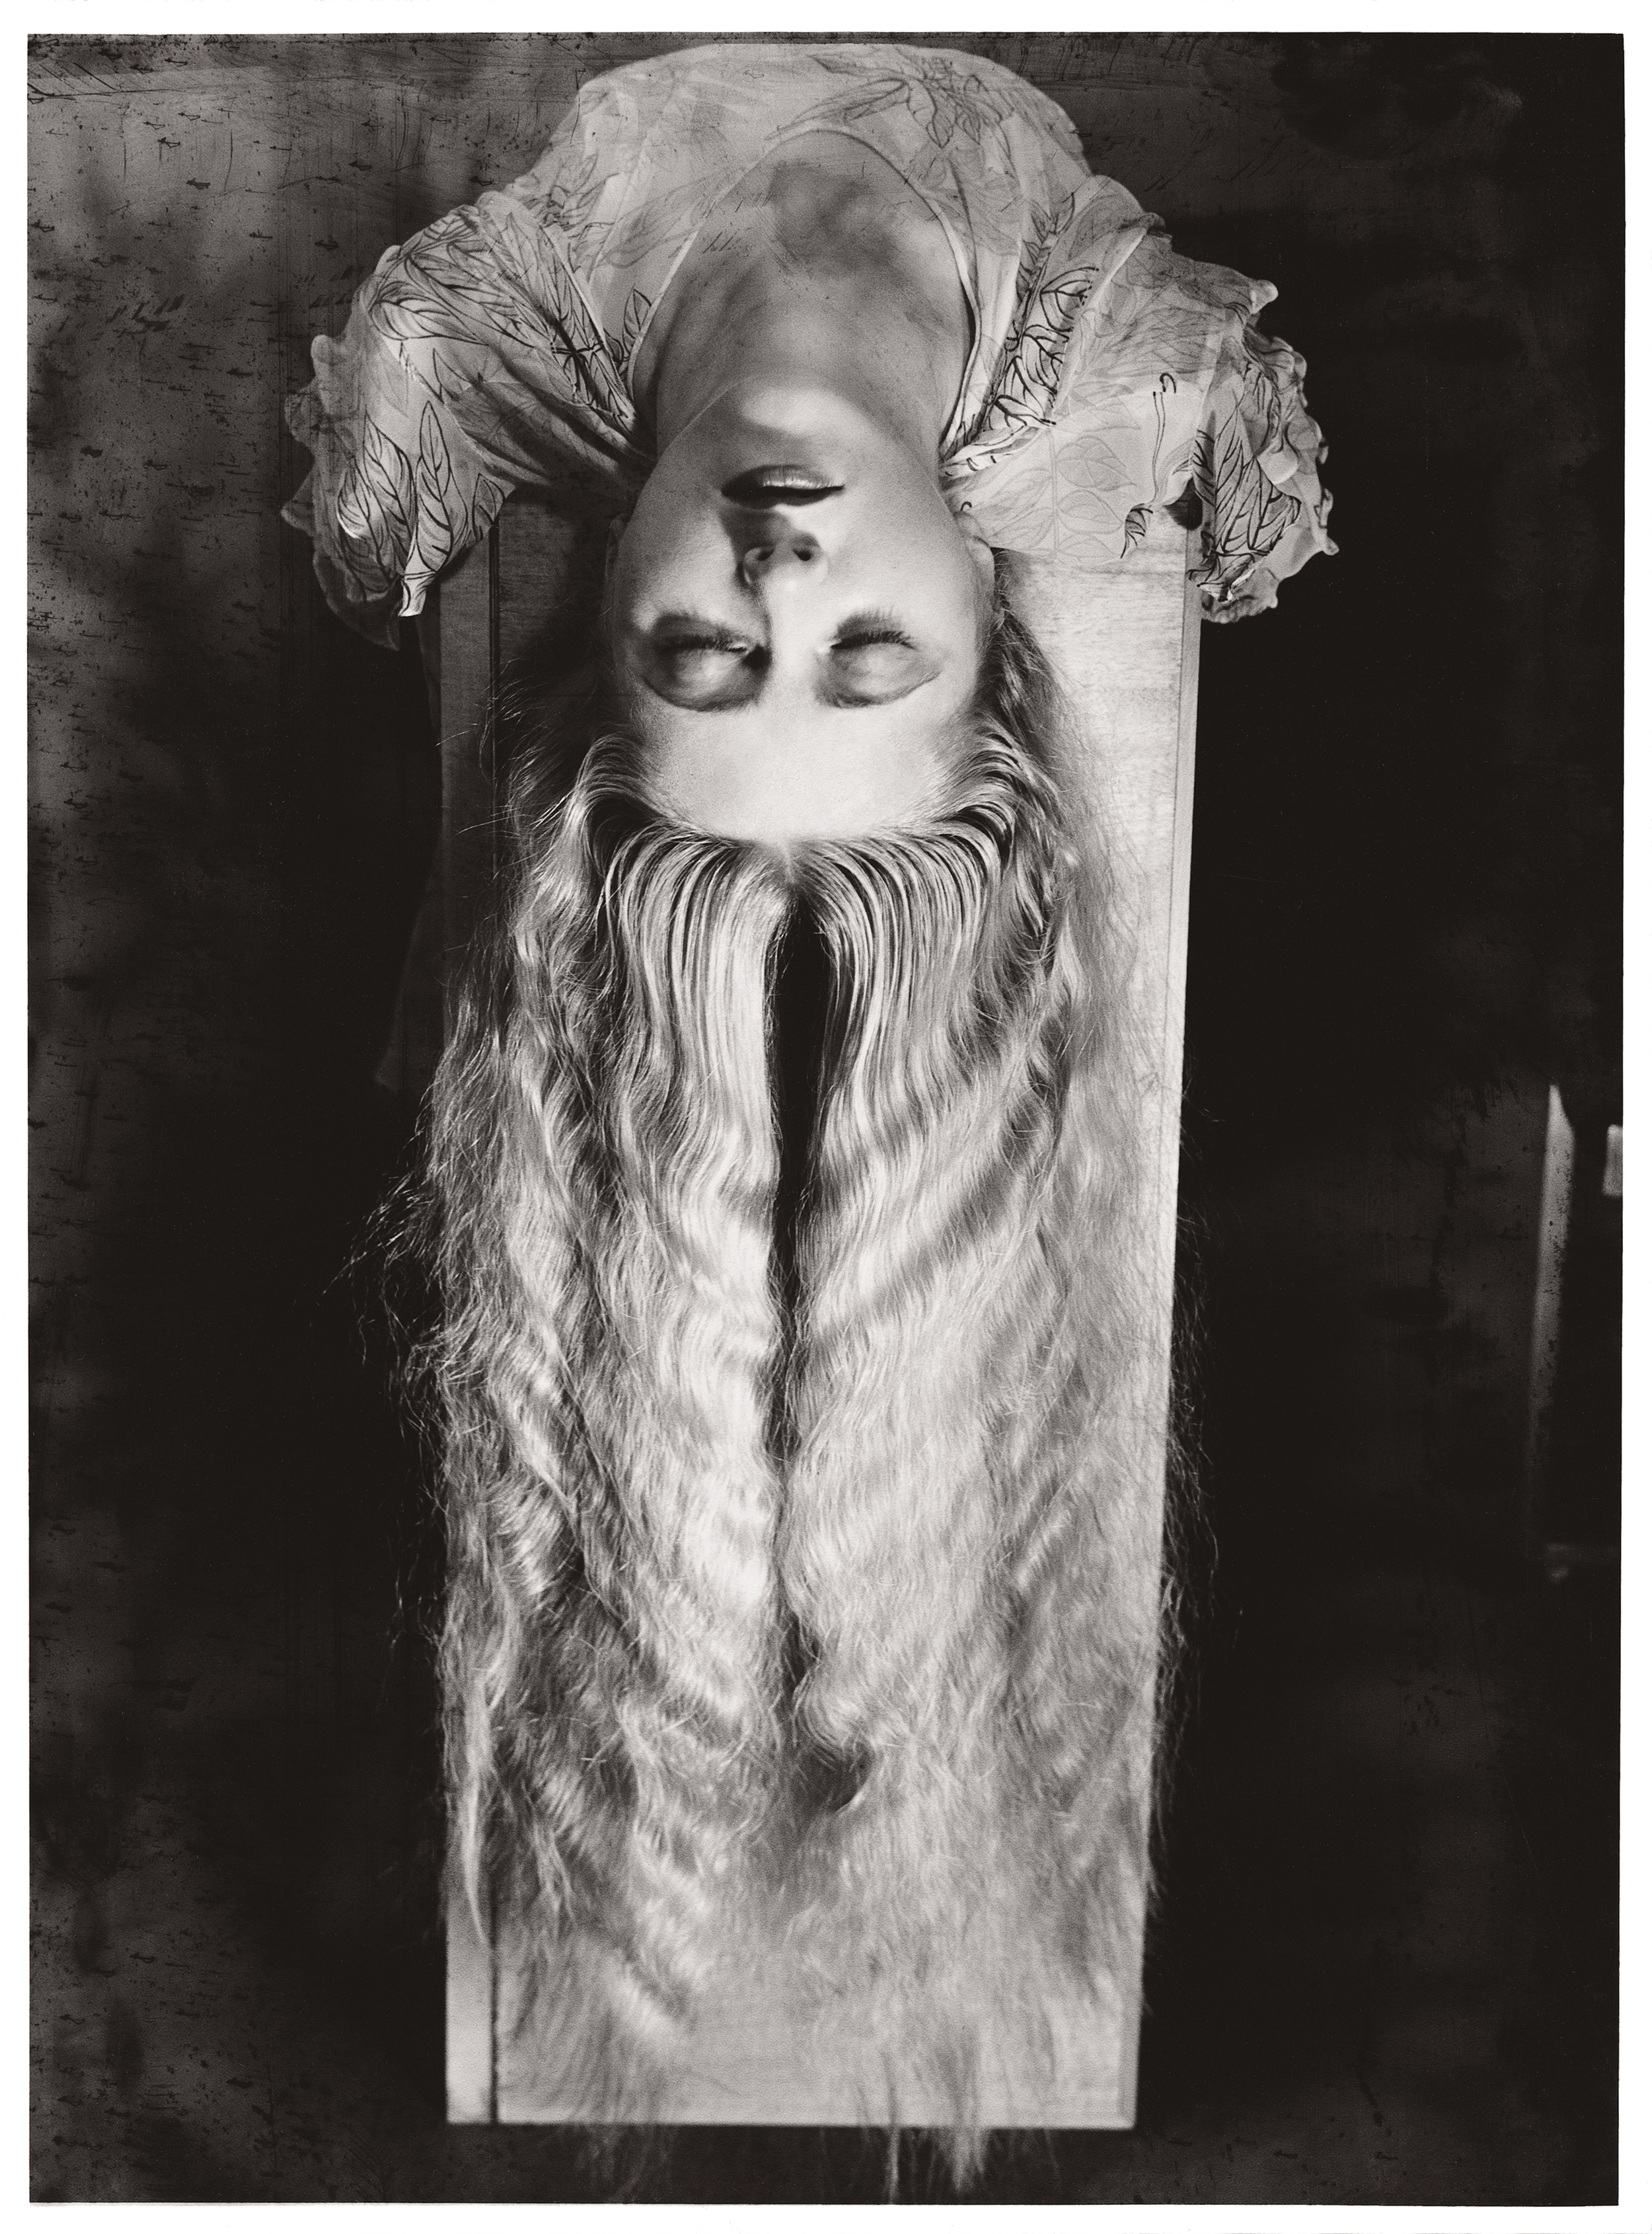 Женщина с длинными волосами (Woman with Long Hair) by Man Ray - 1929 - - 